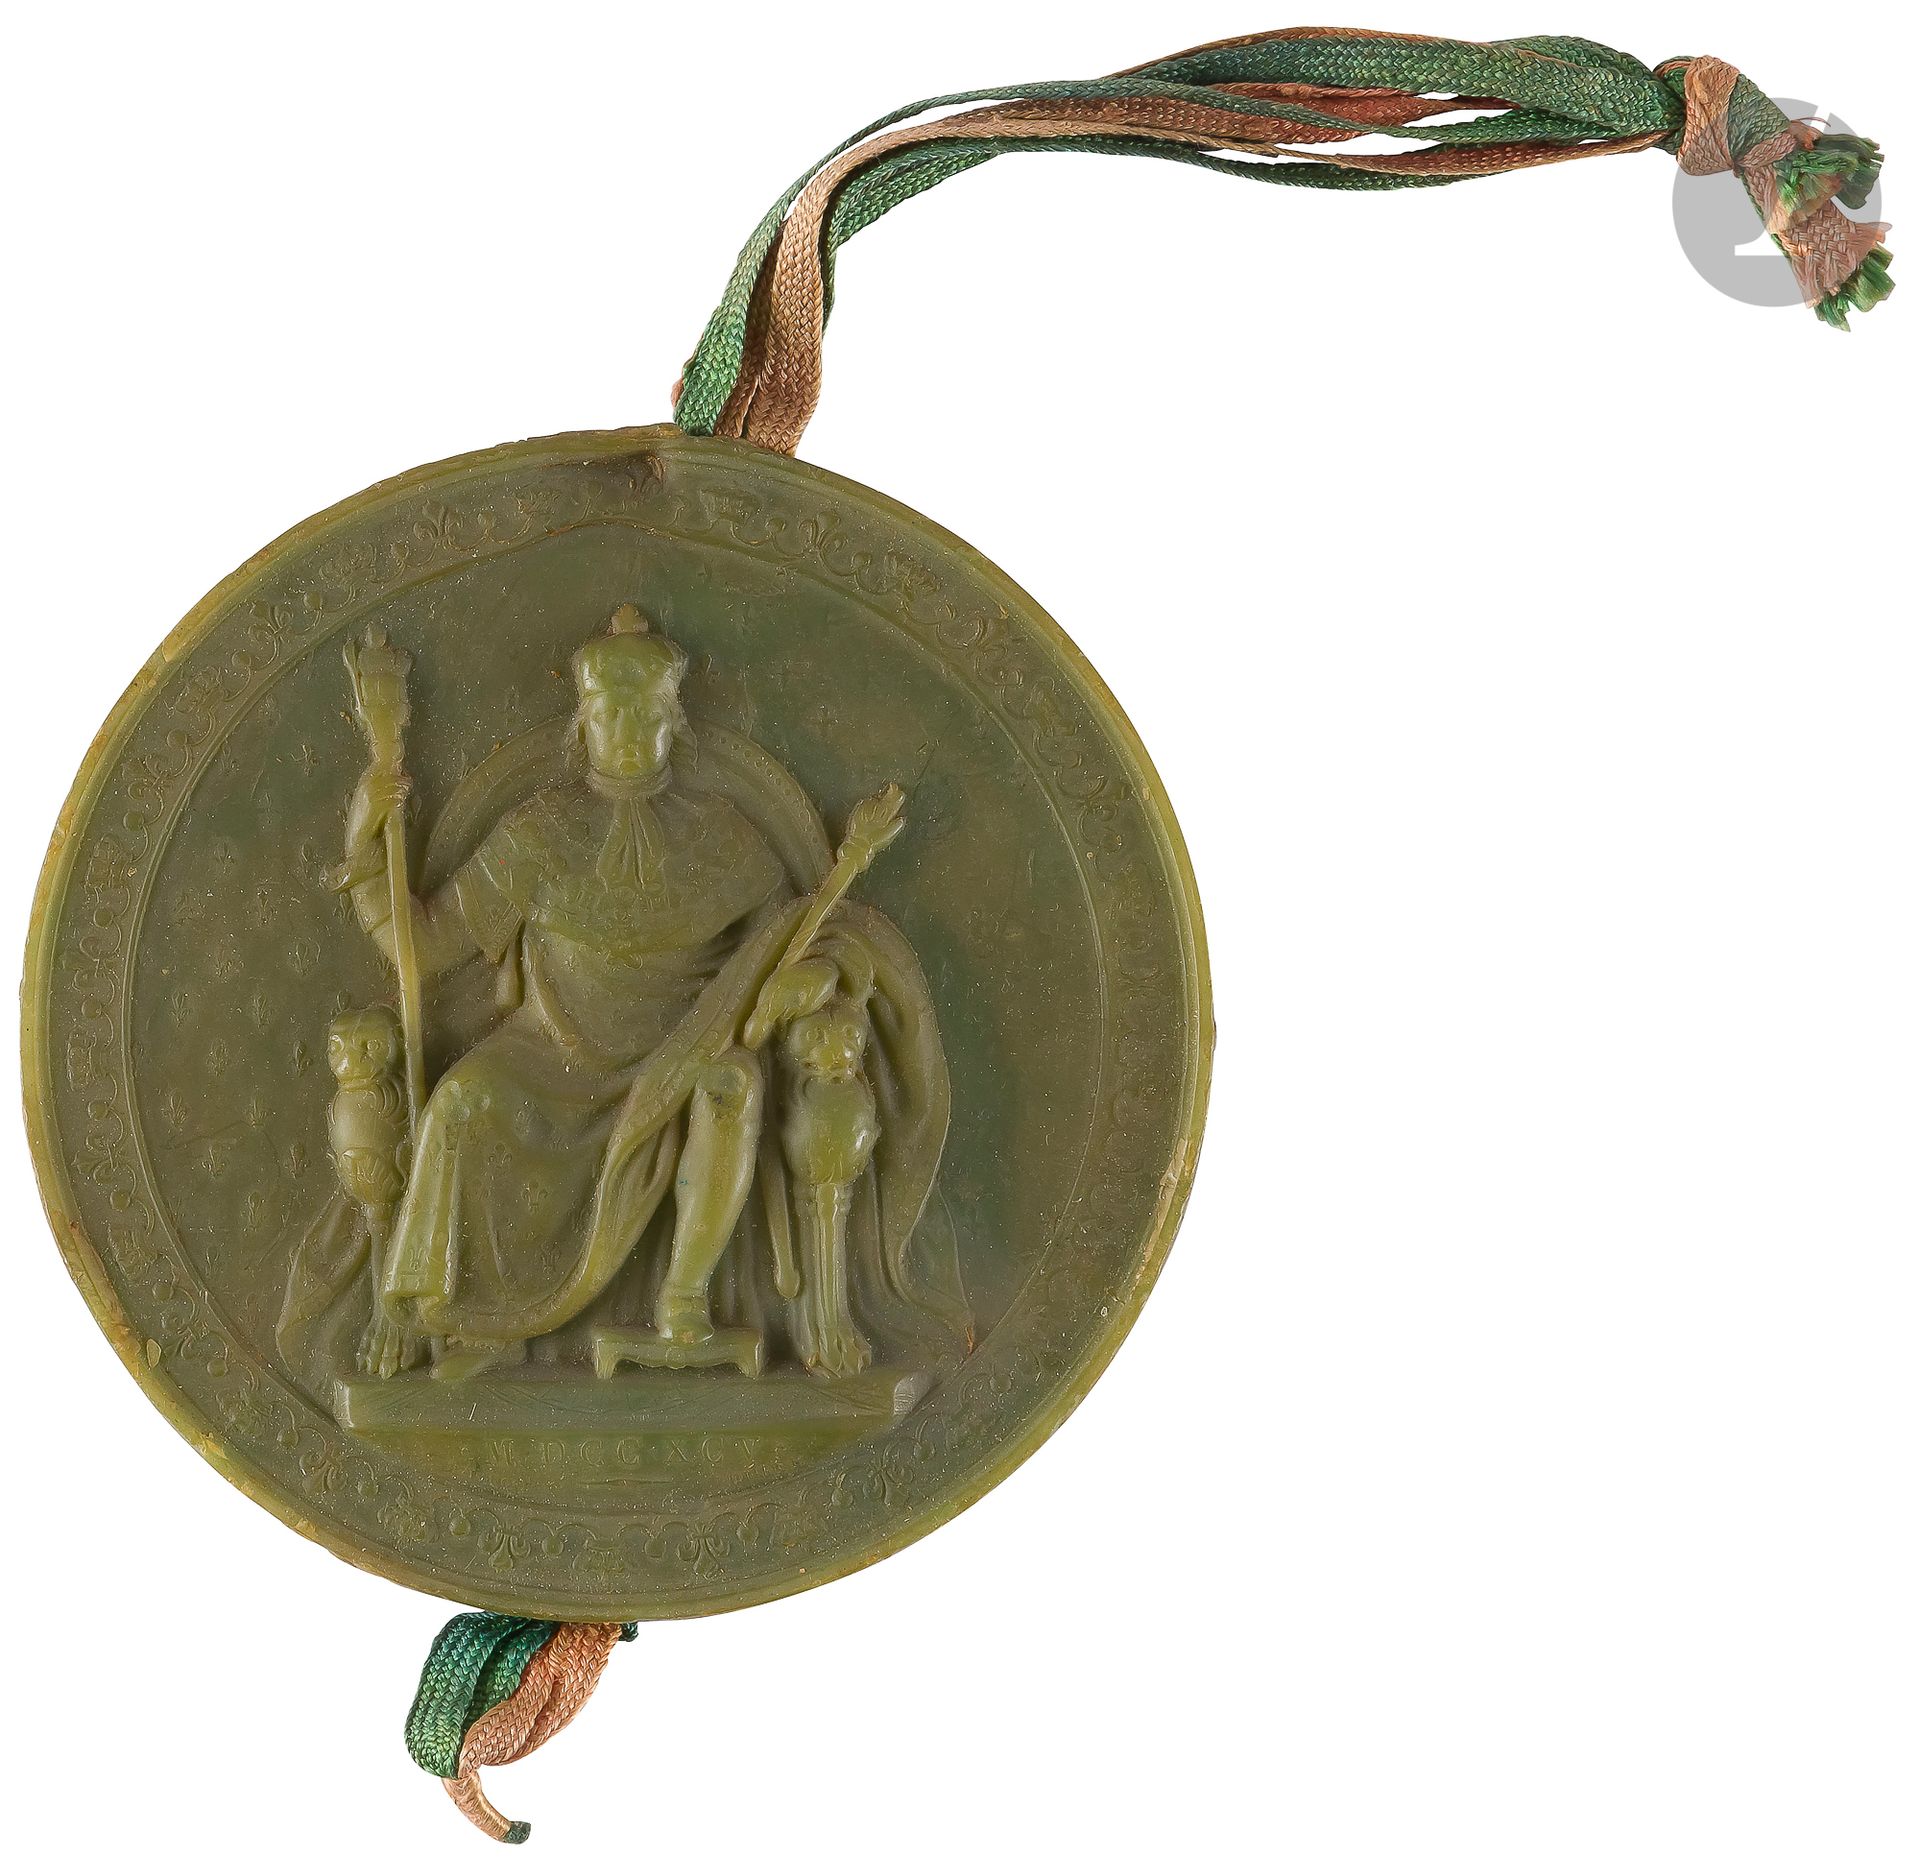 Null 路易十八，法国和
纳瓦拉
国王
绿色蜡质
印章
及其丝带。
在它的锡盒里。
直径：12.5 cmB
.E.